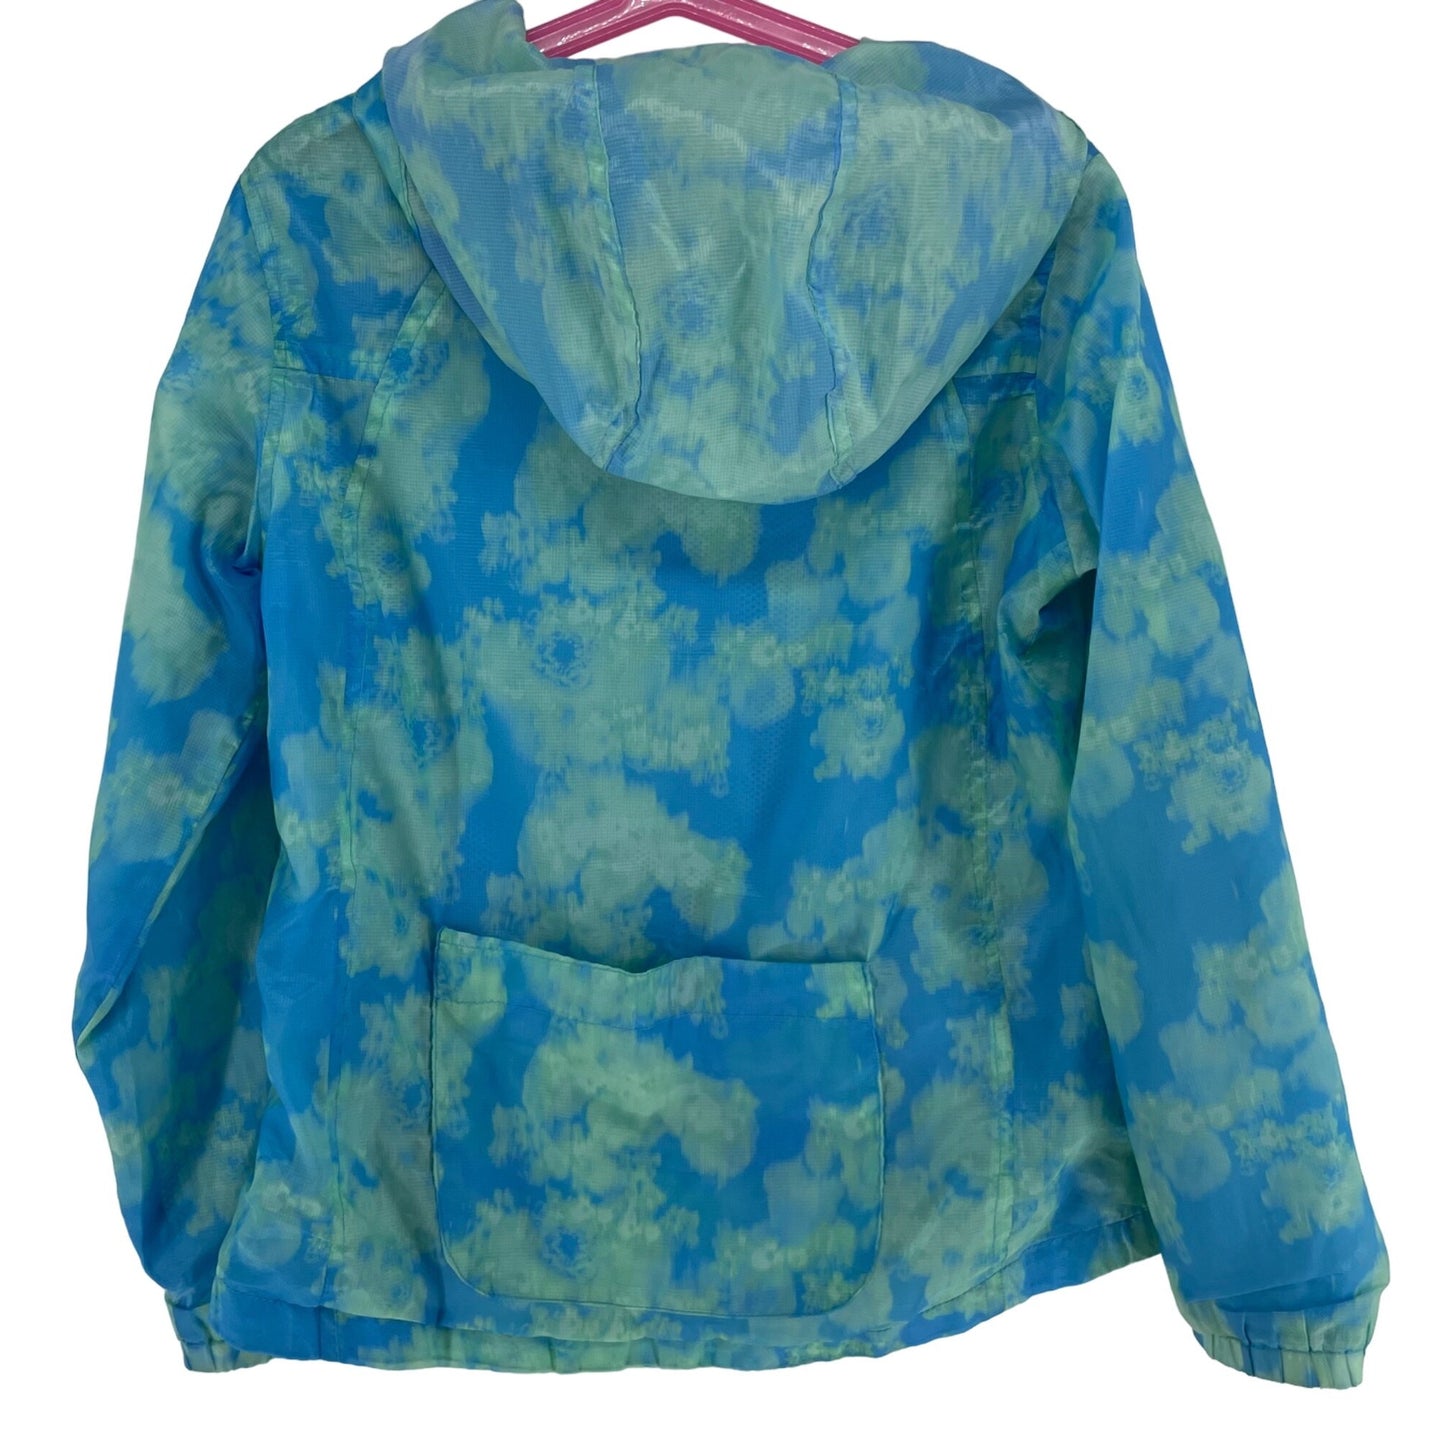 Vertical '9 Girl's Size Medium (8) Aqua Blue & Mint Green Hooded Lightweight Wind Breaker Jacket